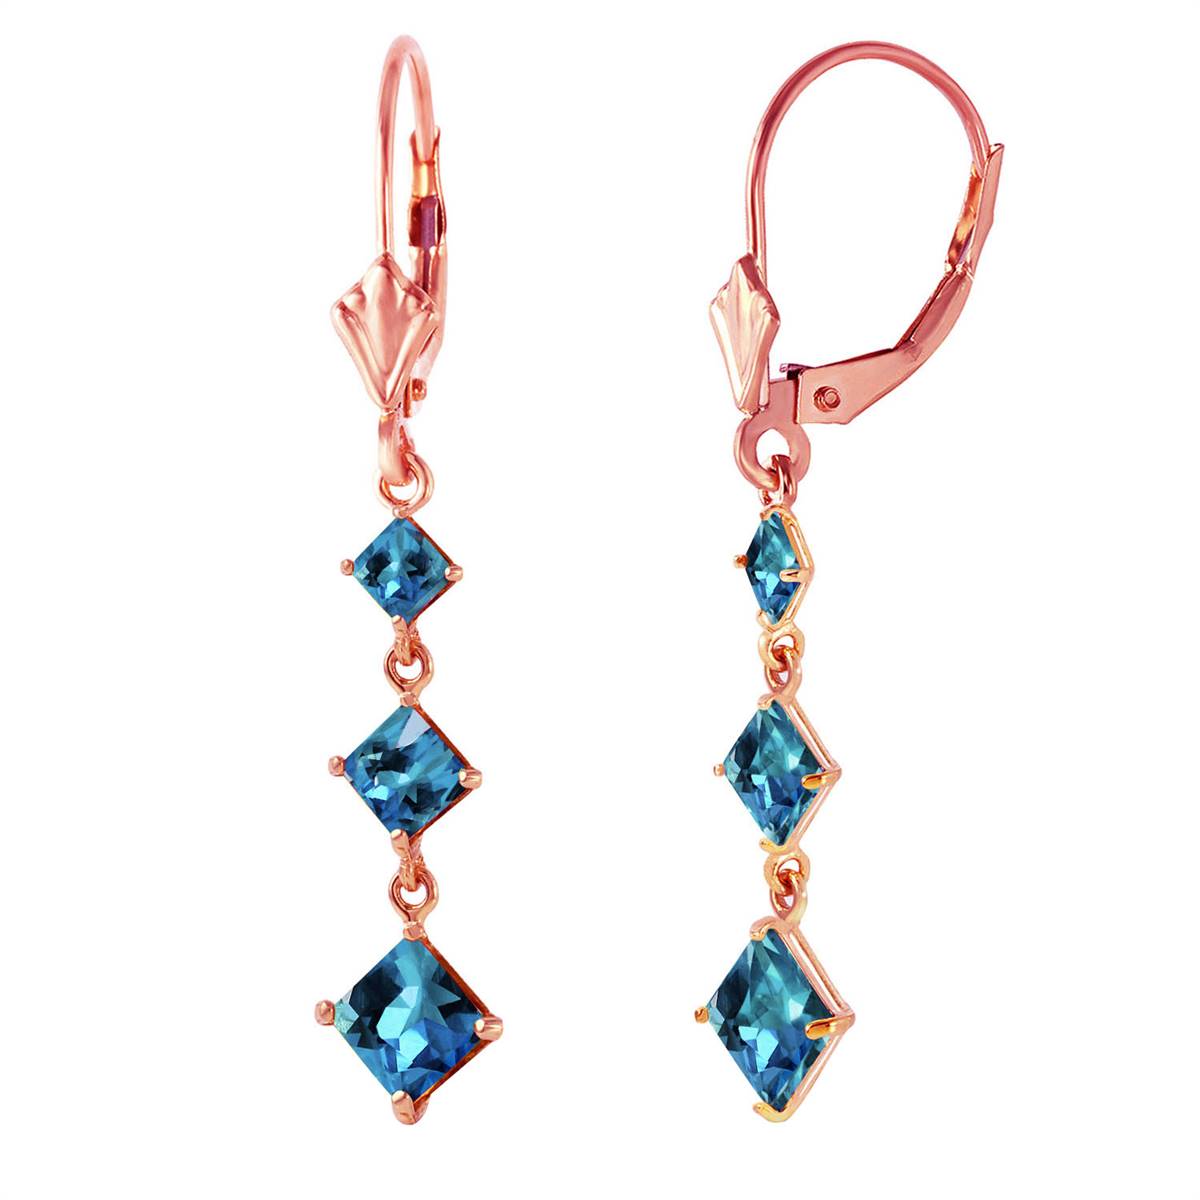 4.79 Carat 14K Solid Rose Gold Square Blue Topaz Drop Earrings